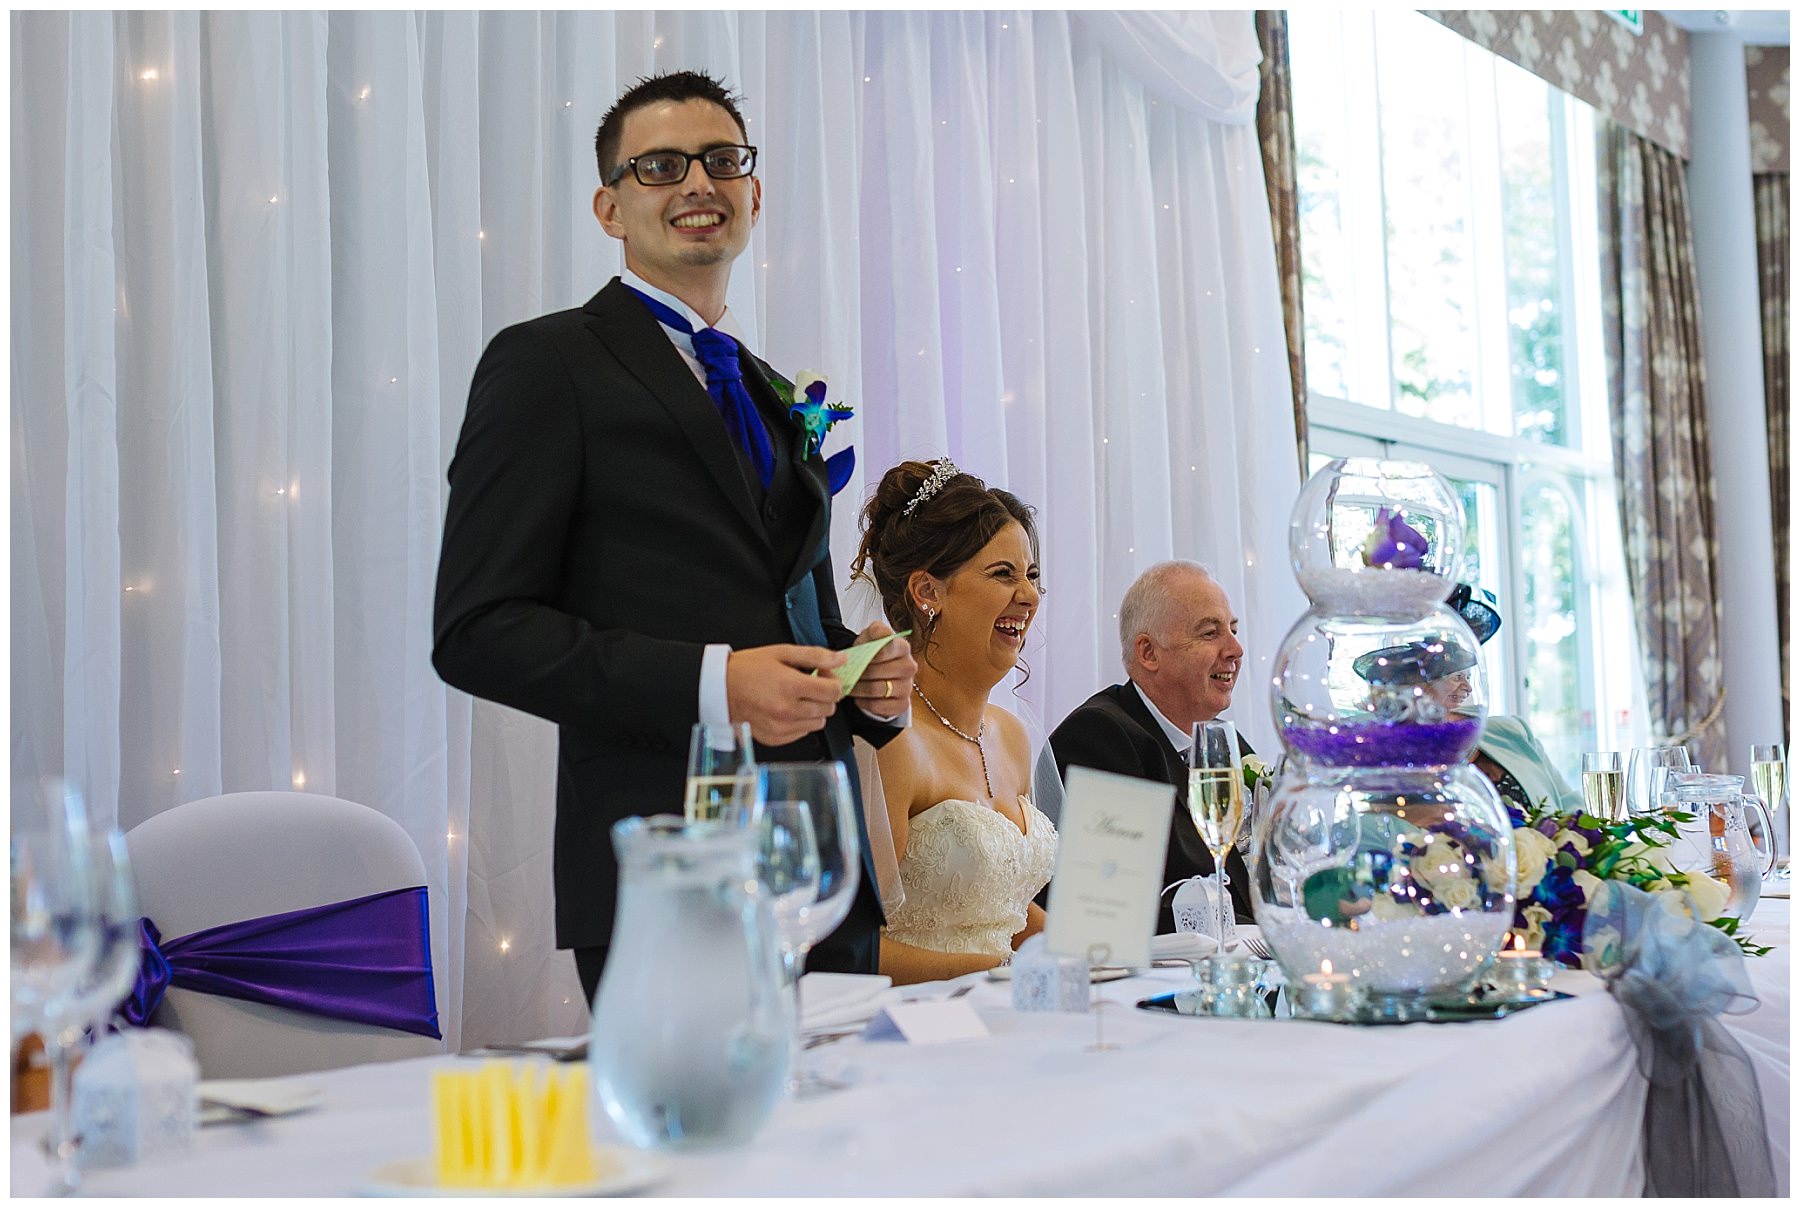 groom address guests during wedding speech